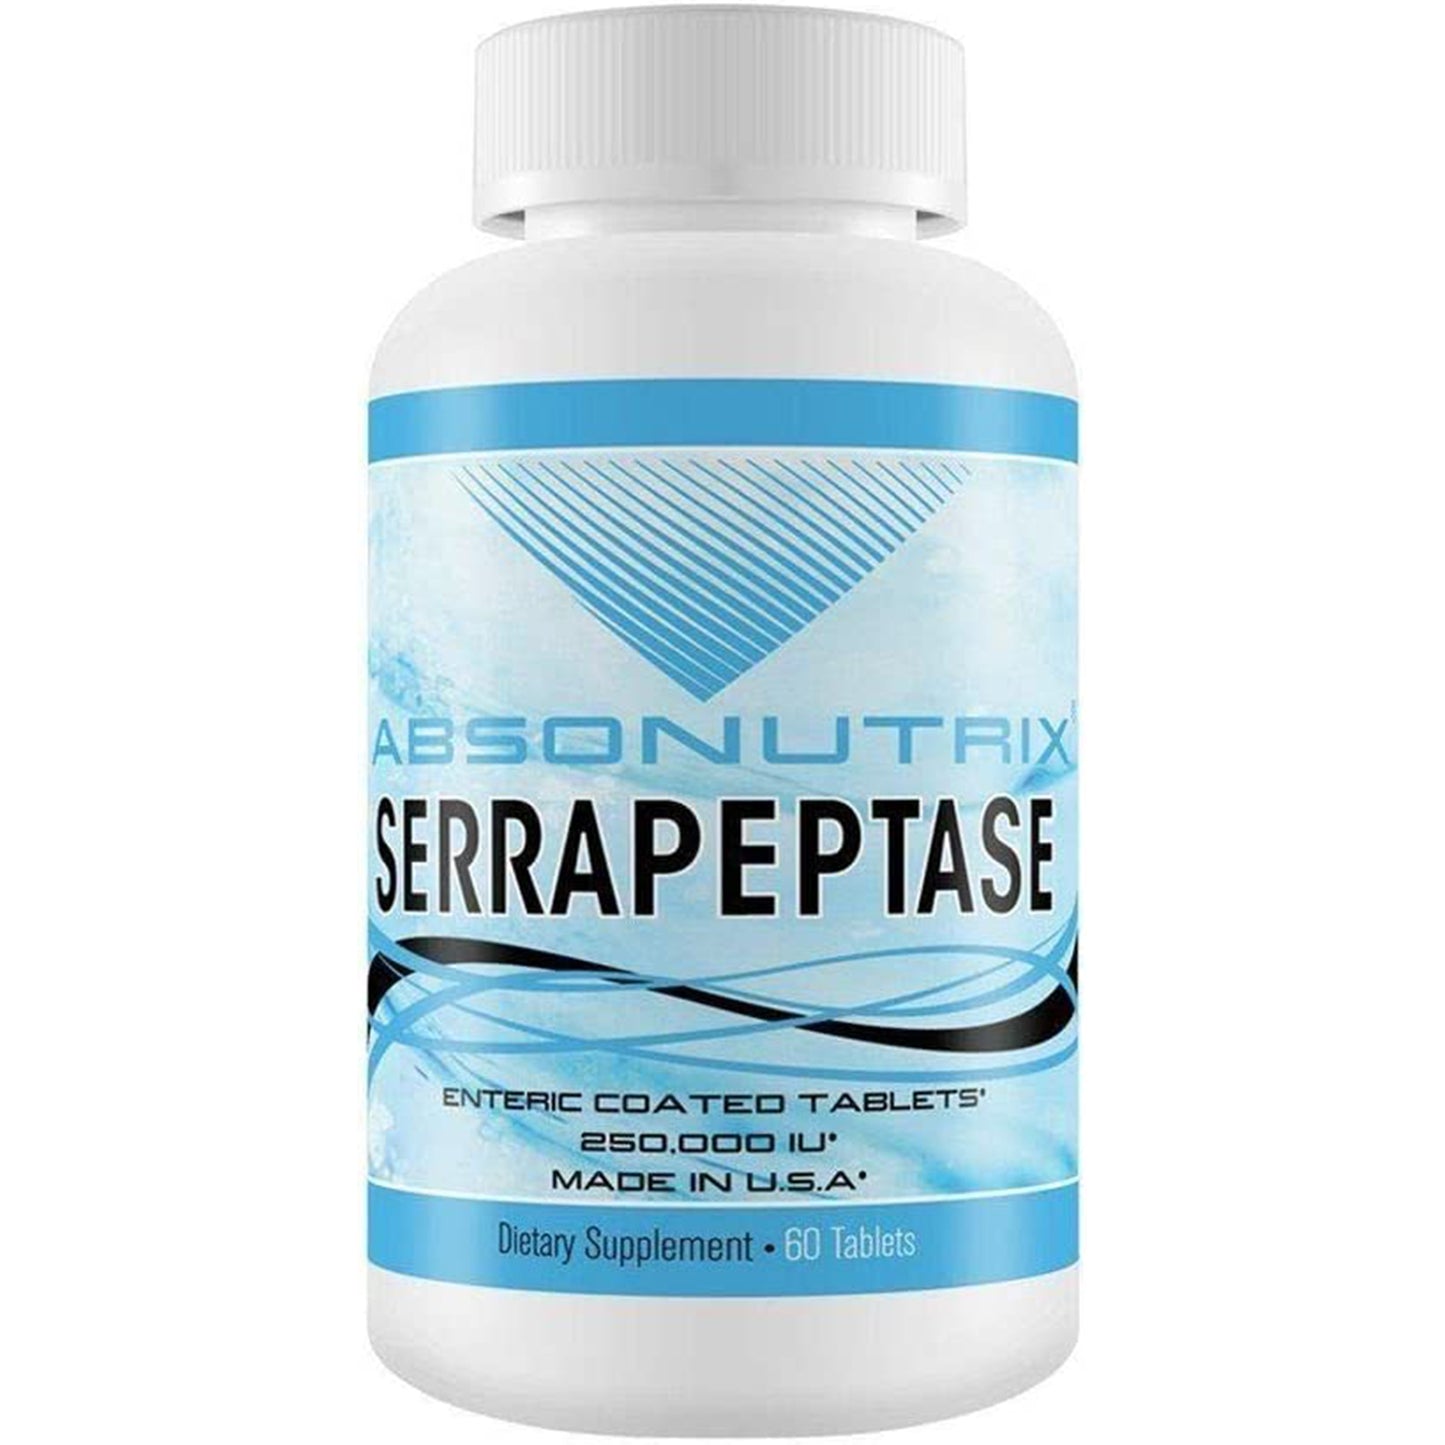 Absonutrix Serrapeptase 60 capsules